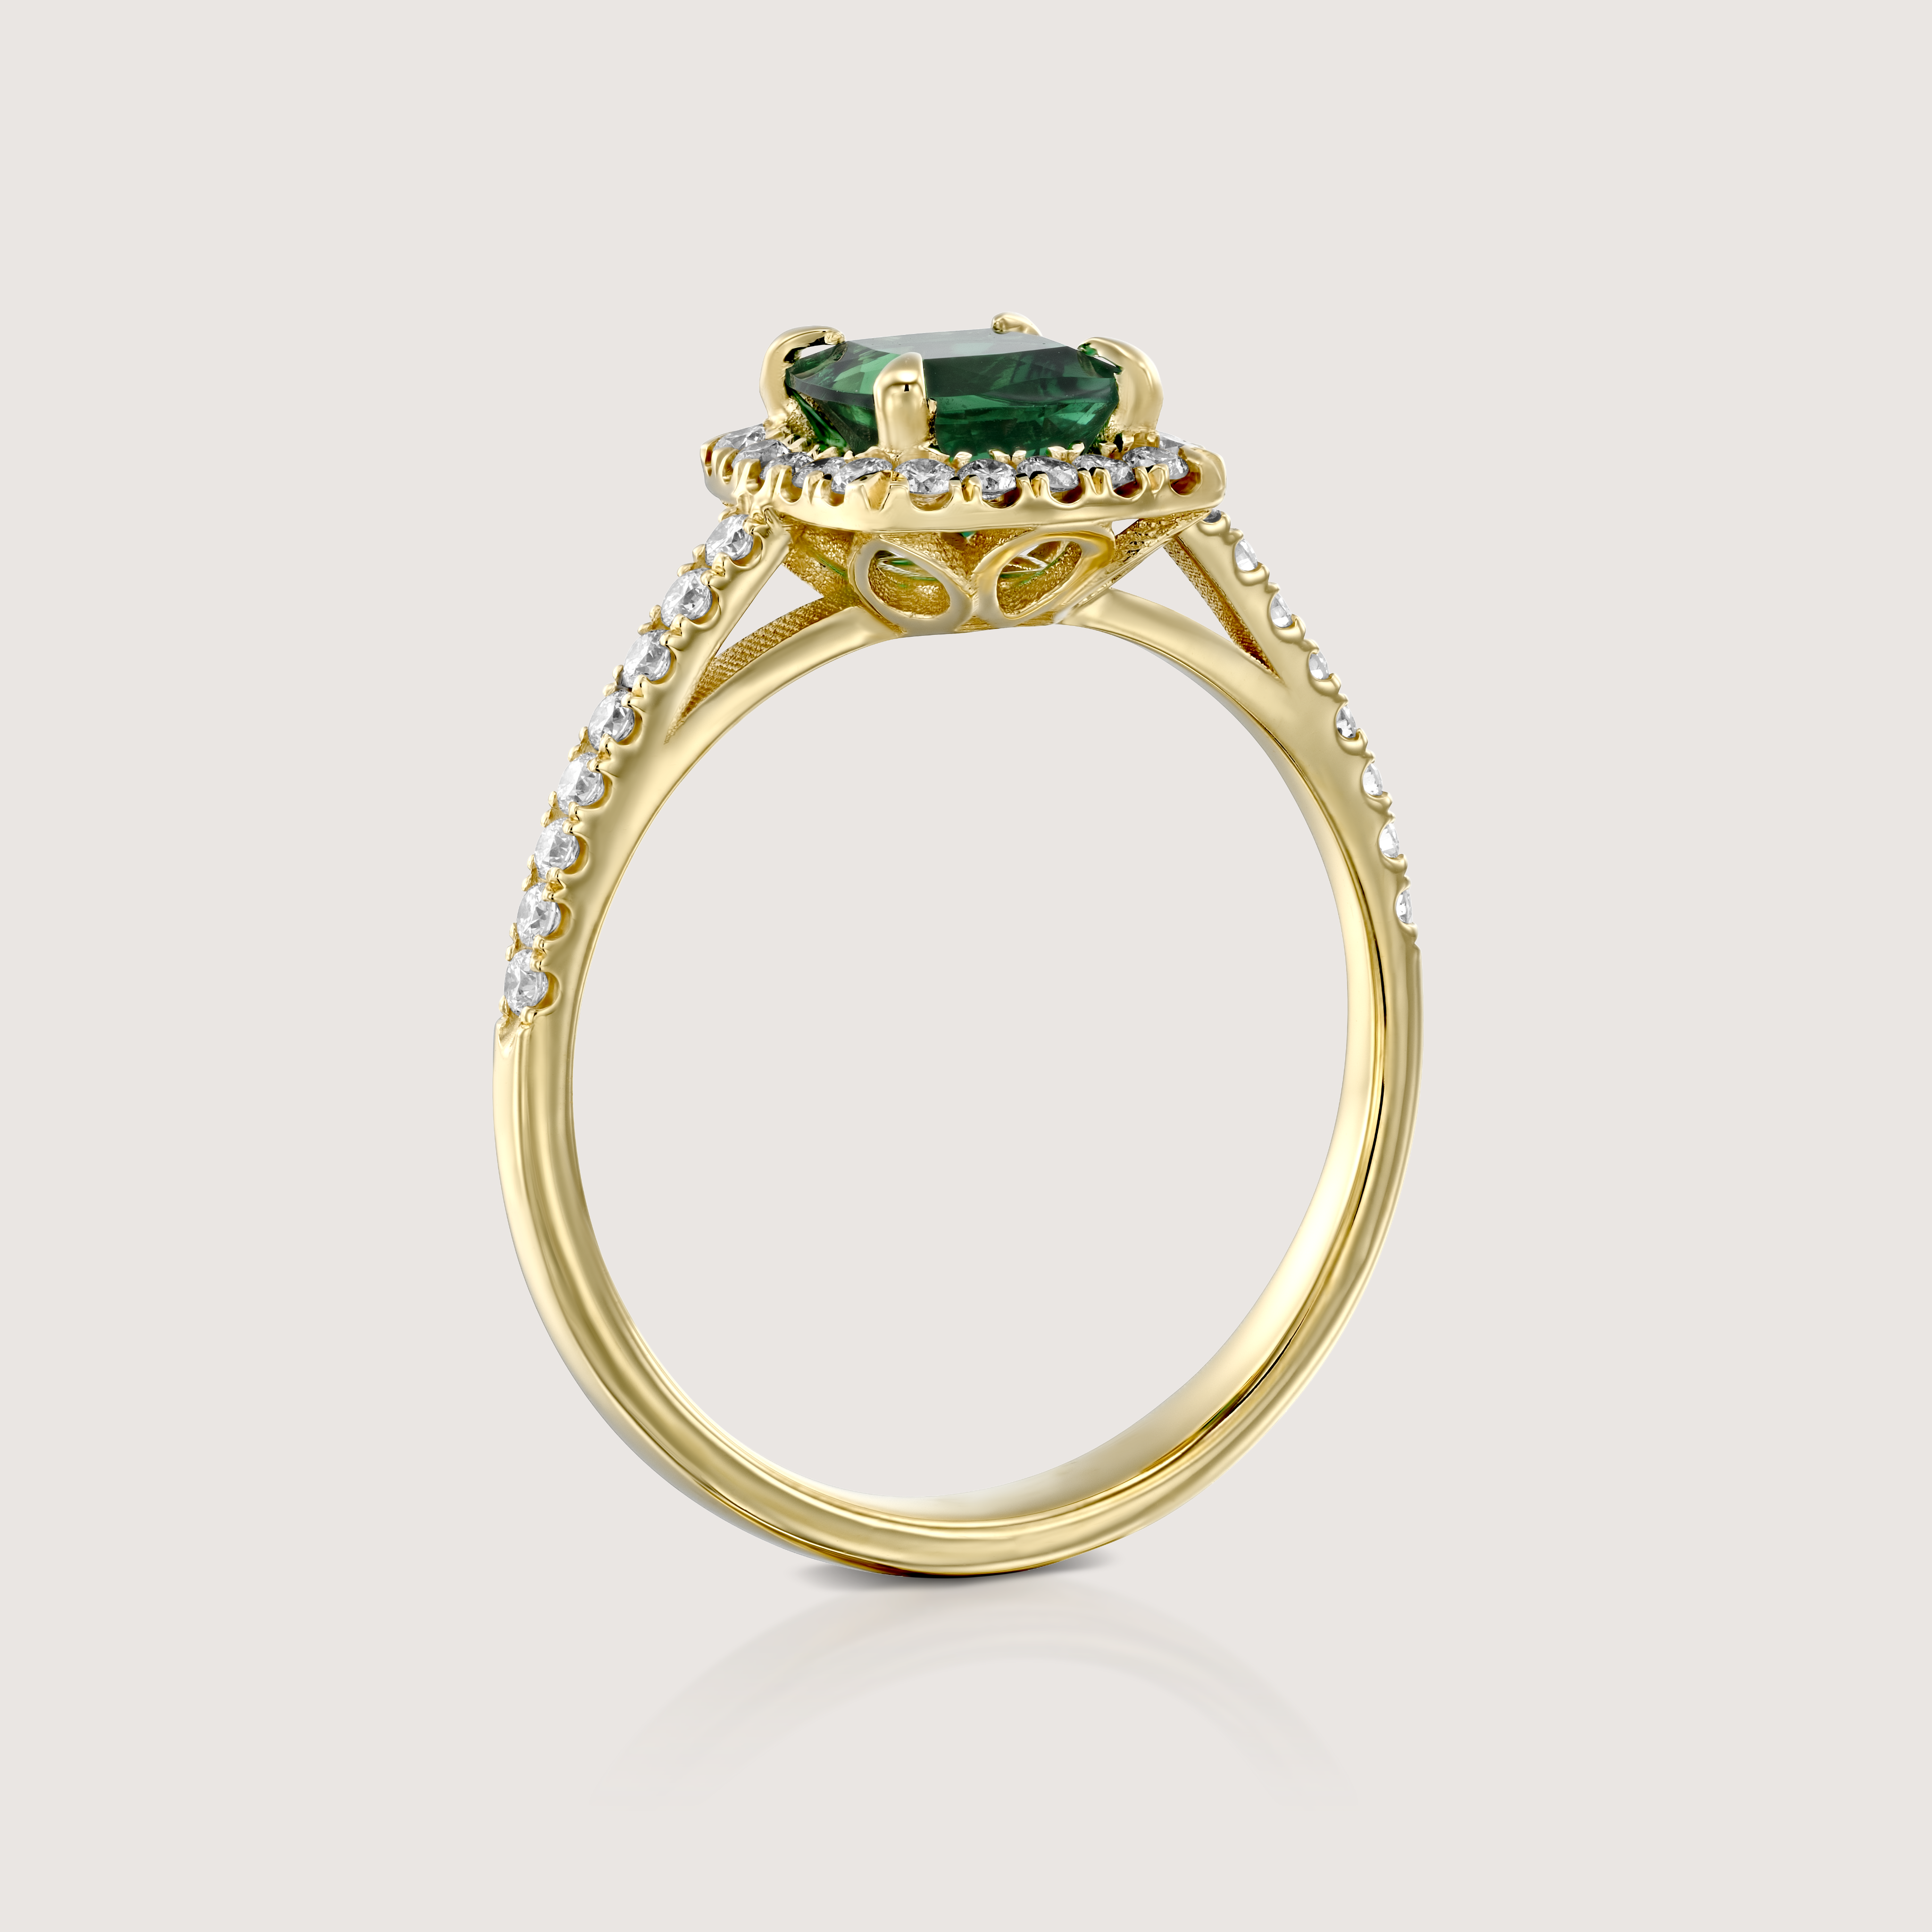 Rachel Ring With Emerald and Diamonds